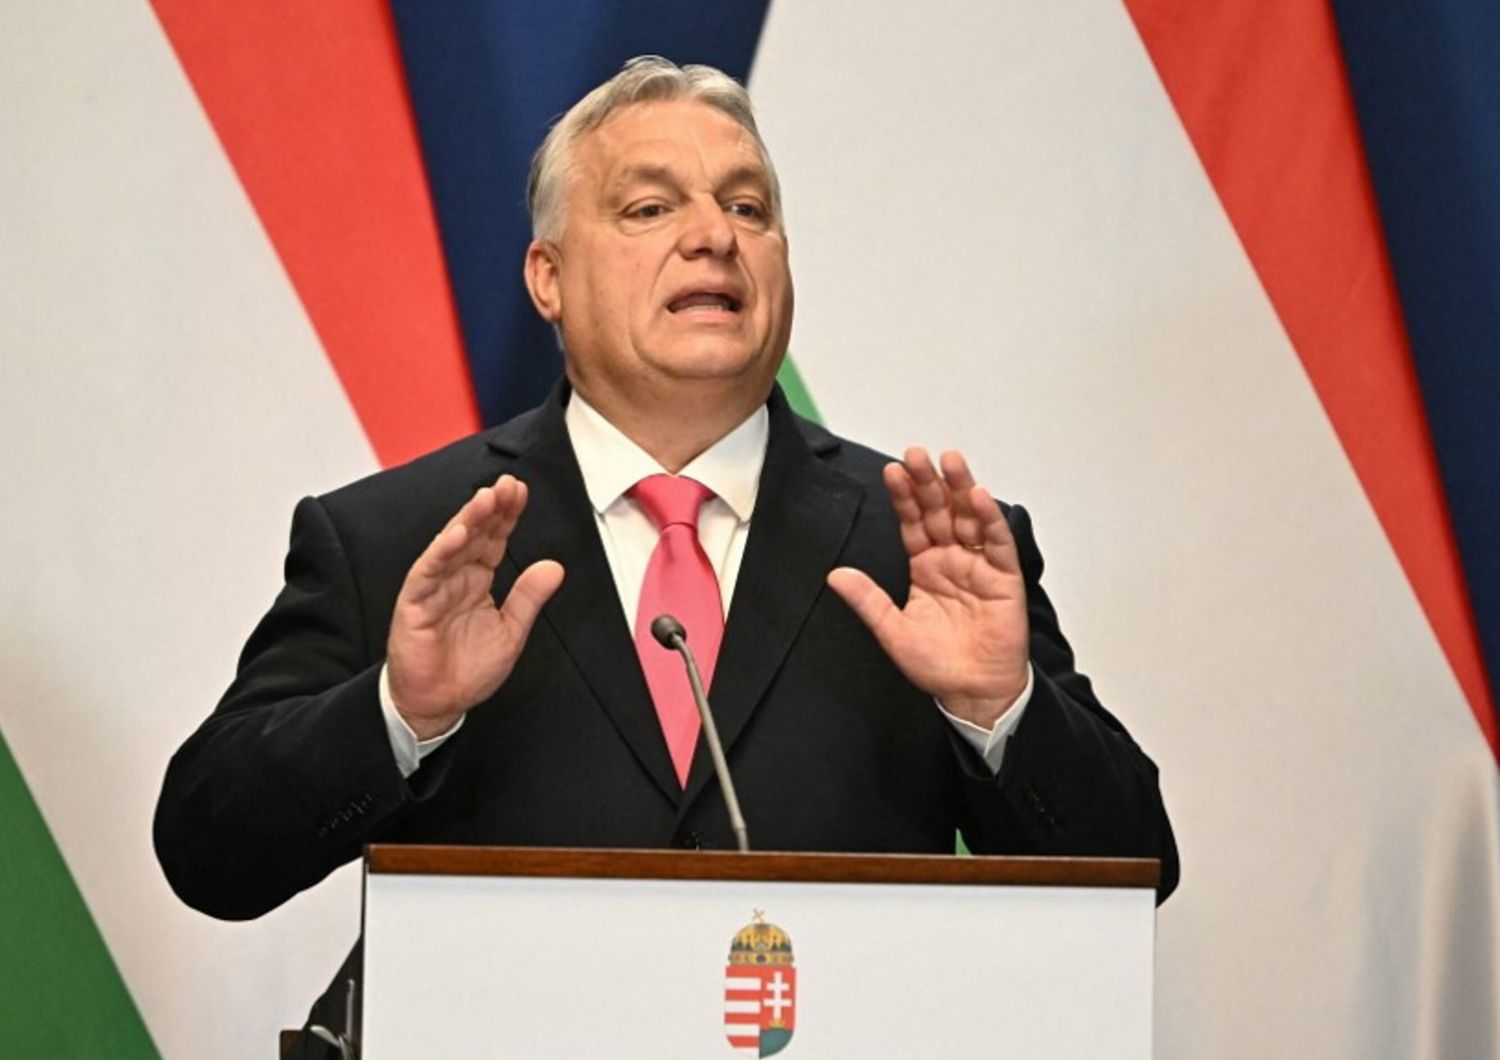 Vicktor Orban